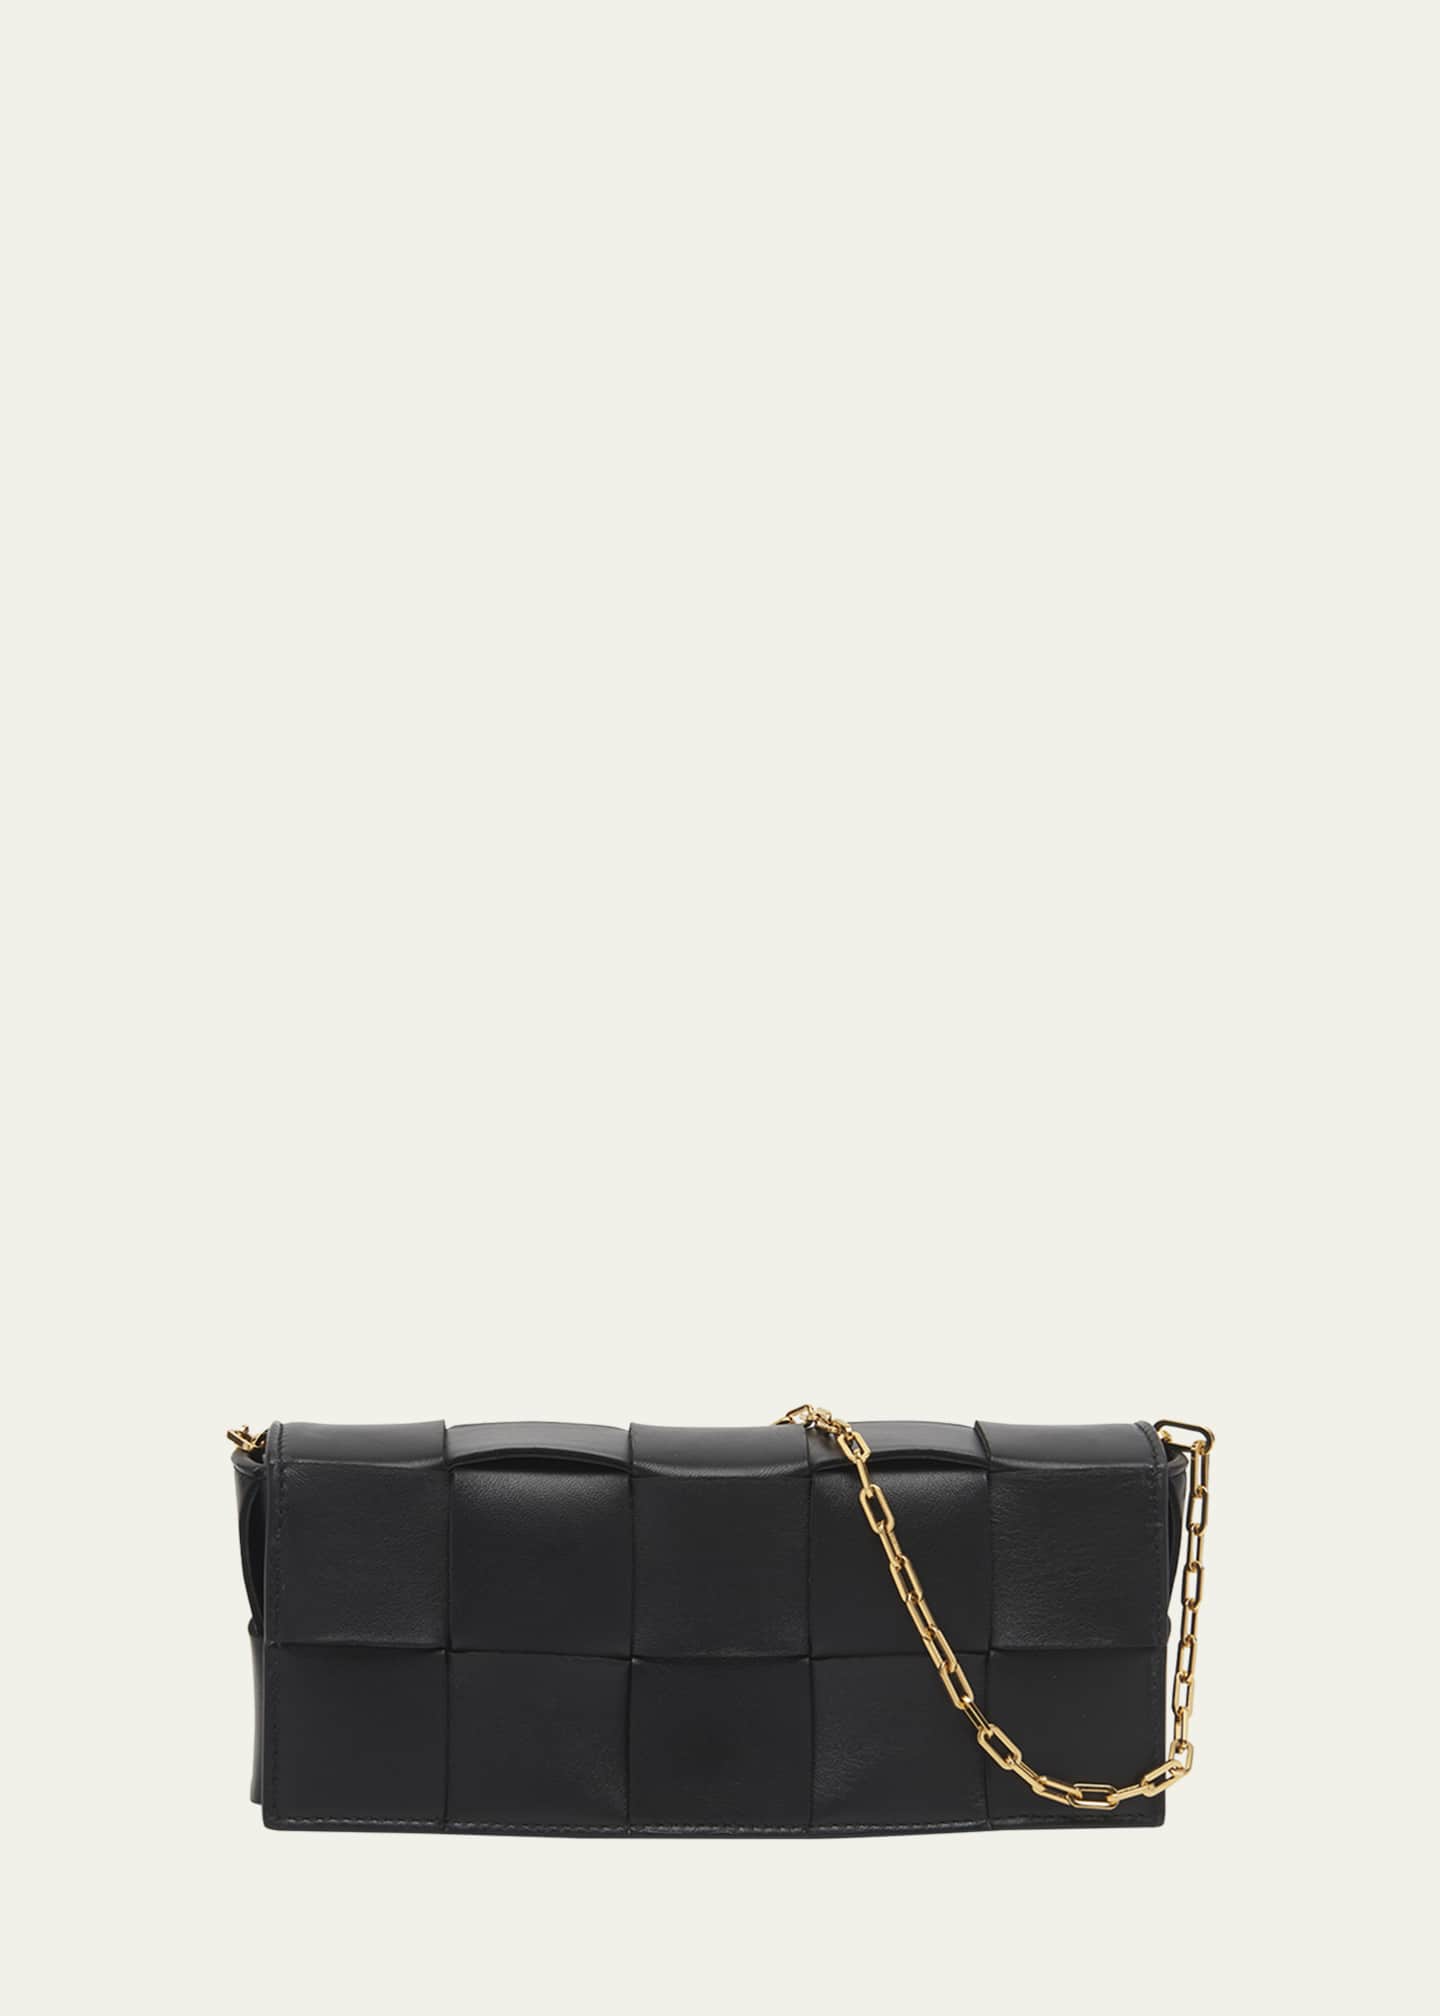 Bottega Veneta Cassette Intrecciato Lambskin Wallet on Chain, Black/Gold, Women's, Small Leather Goods Wallets